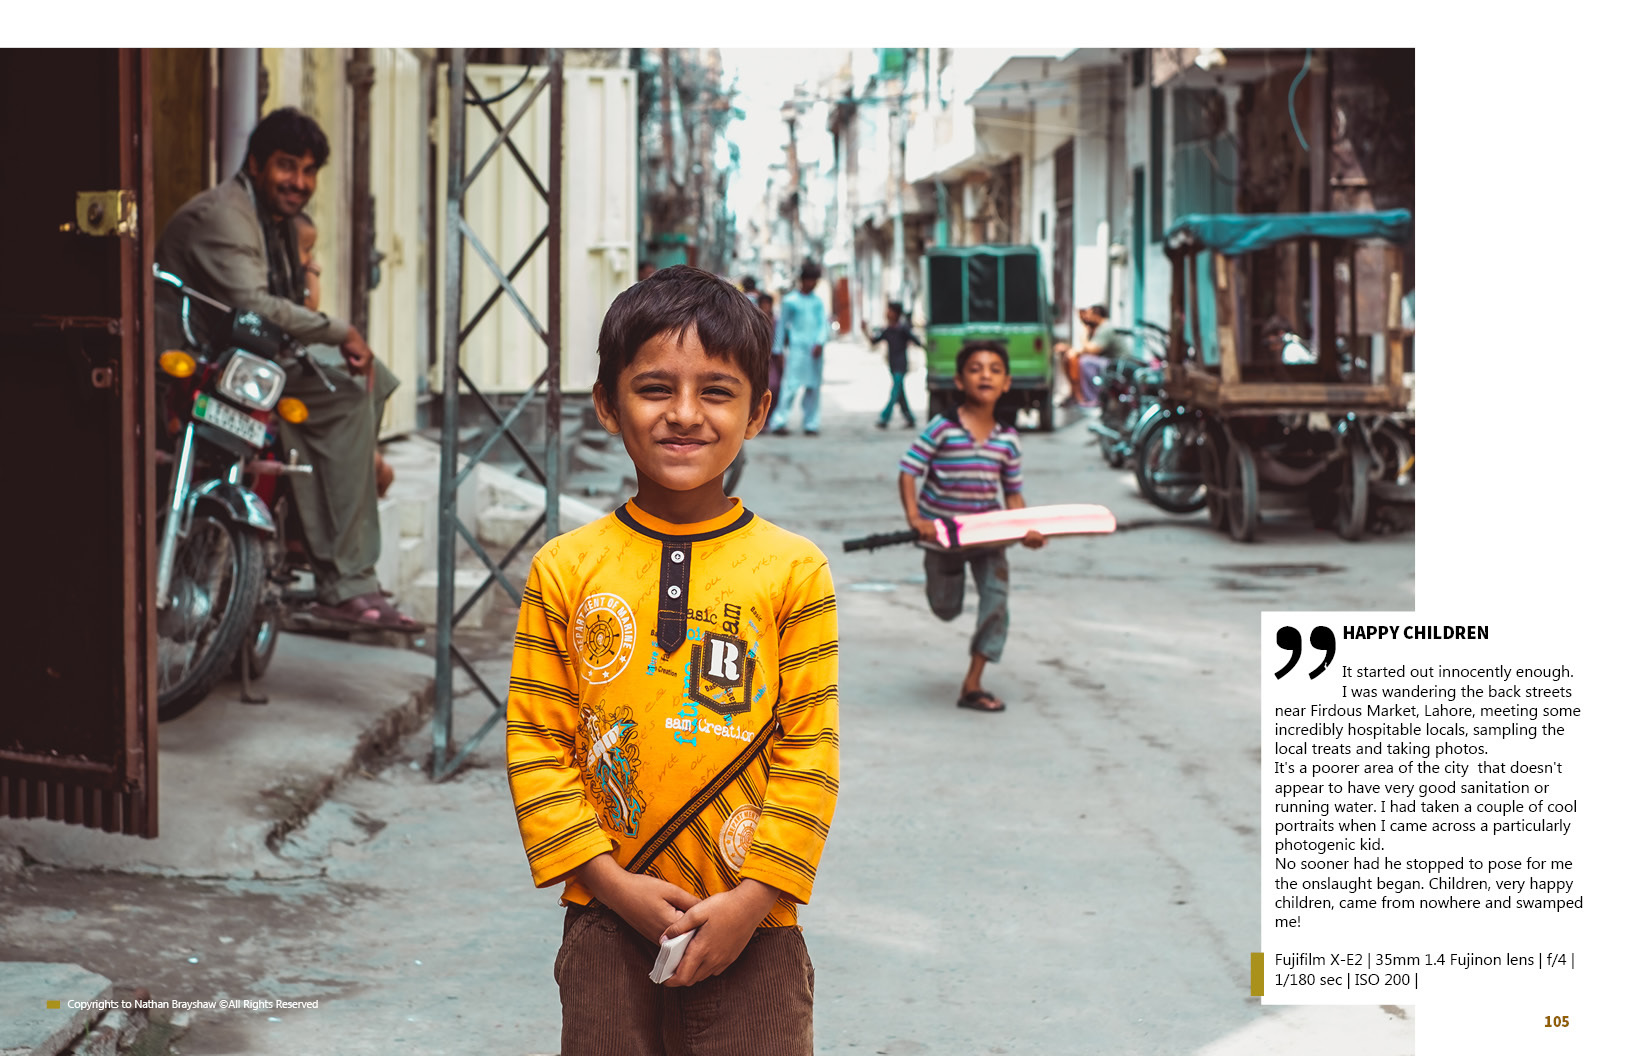 Lens Magazine, documentary photography, photojournalist, Pakistan, travel photography, Nathan Brayshaw